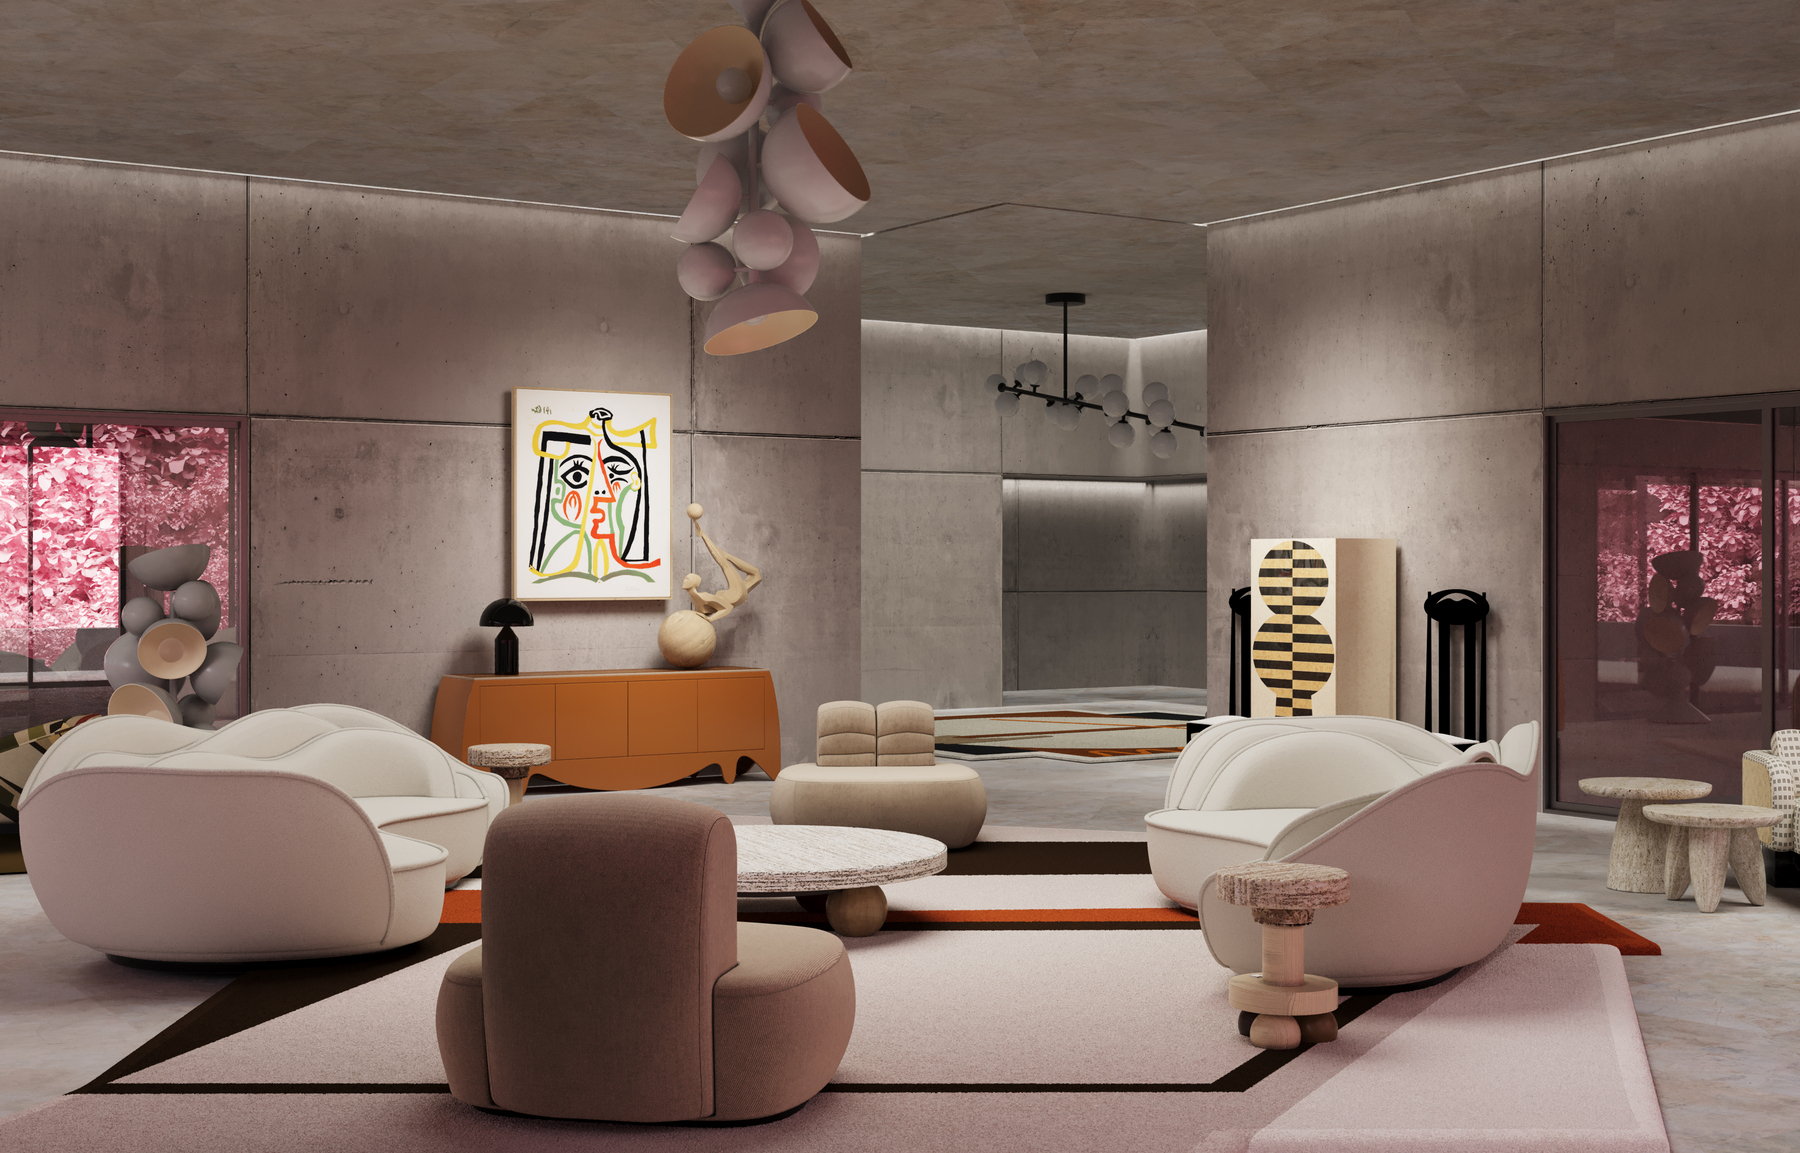 metaverse interiors with unique furniture design by HOMMÉS Studio